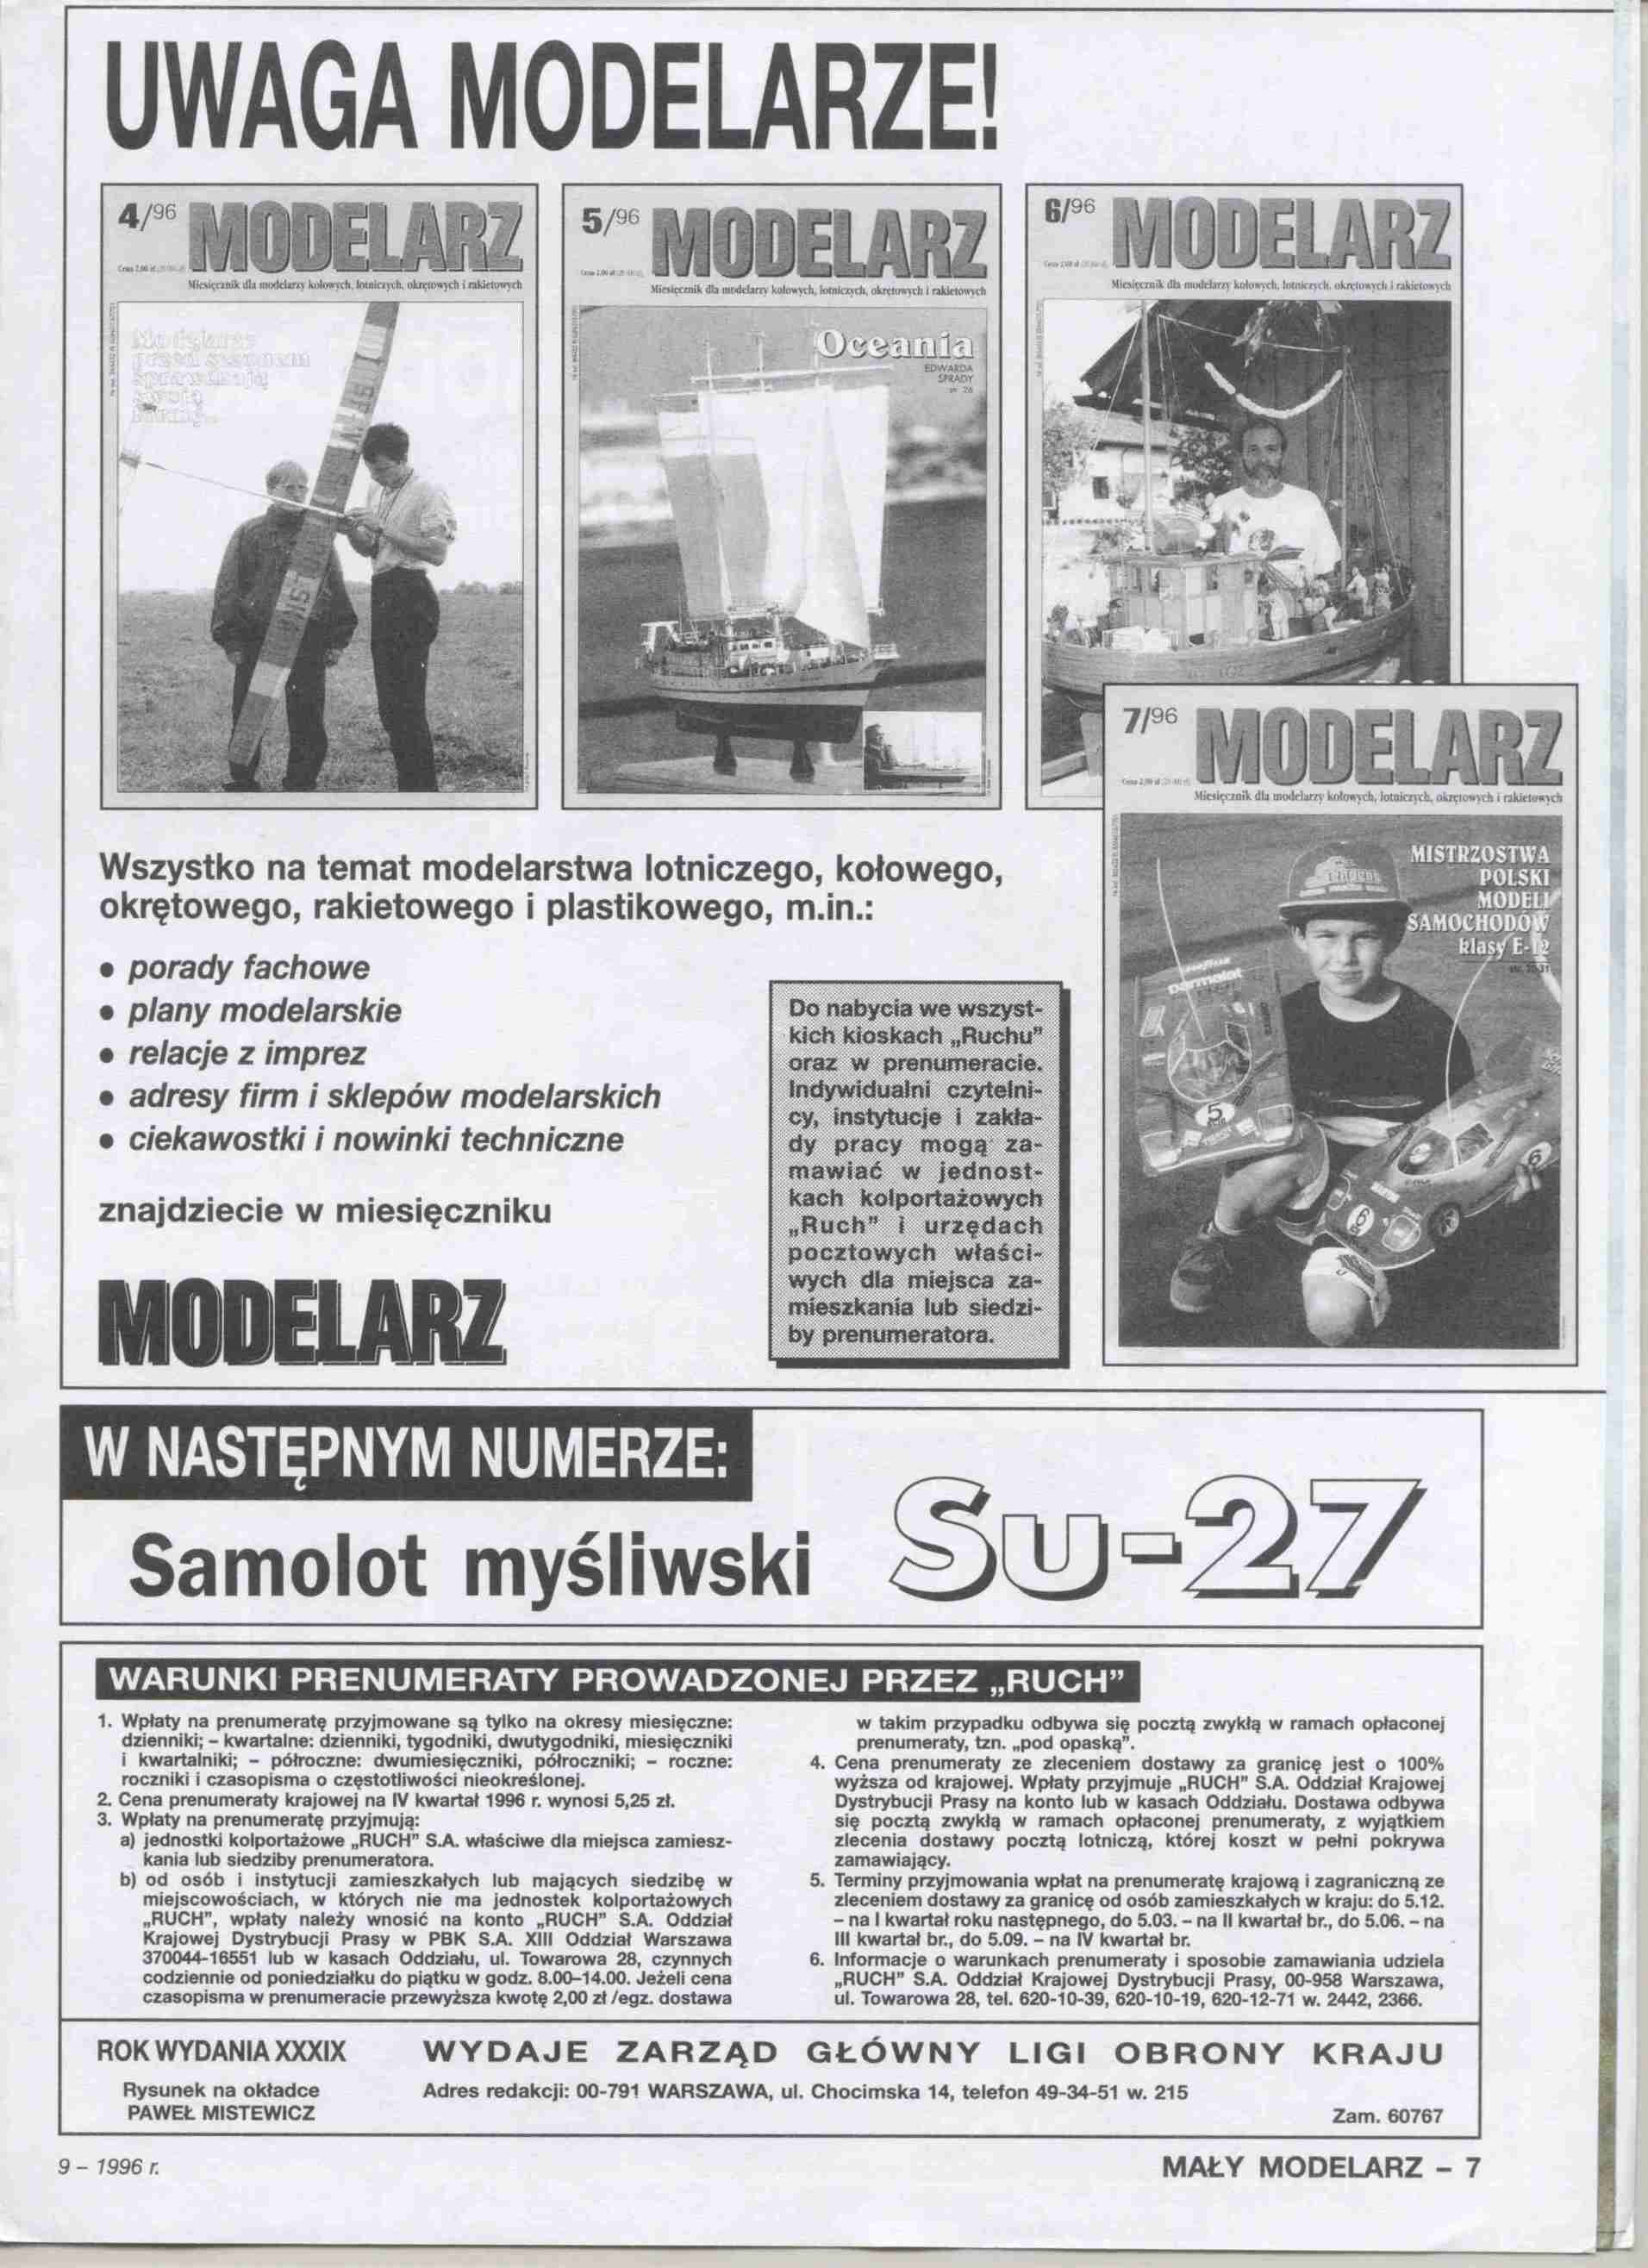 "Maly Modelarz" 9, 1996 7 с.